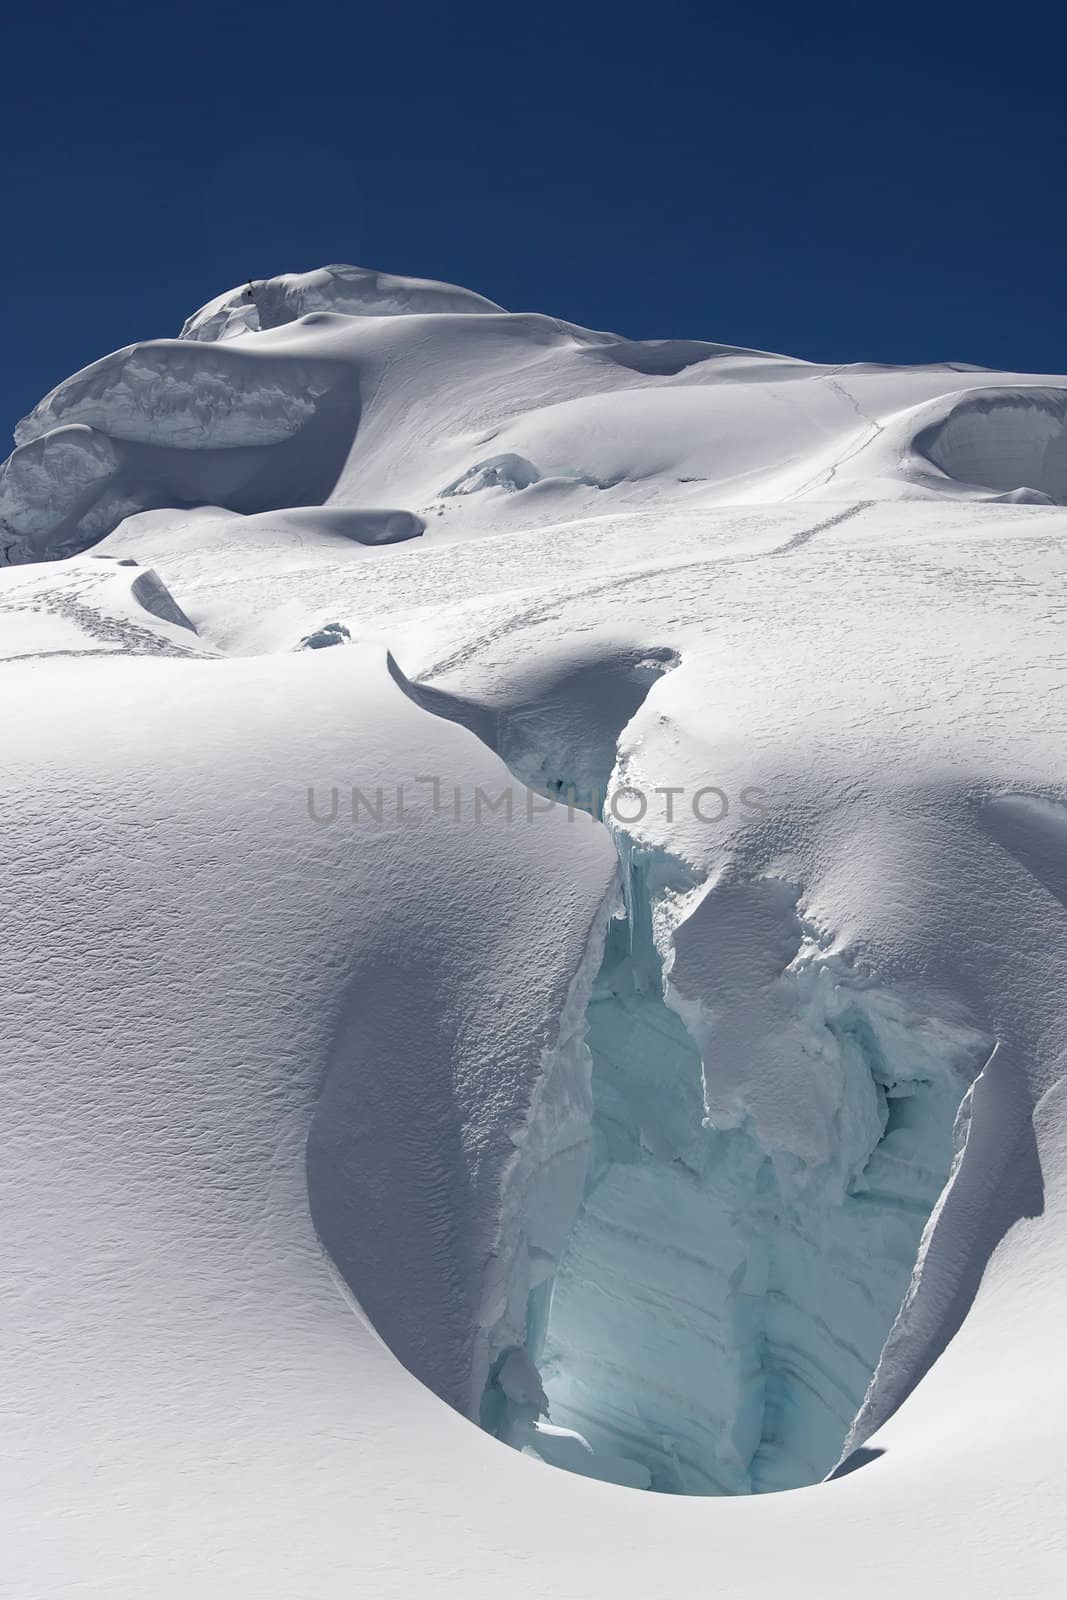 Huge crevasse on classic route to Pisco summit (in the background), Cordillera Blanca, Peru